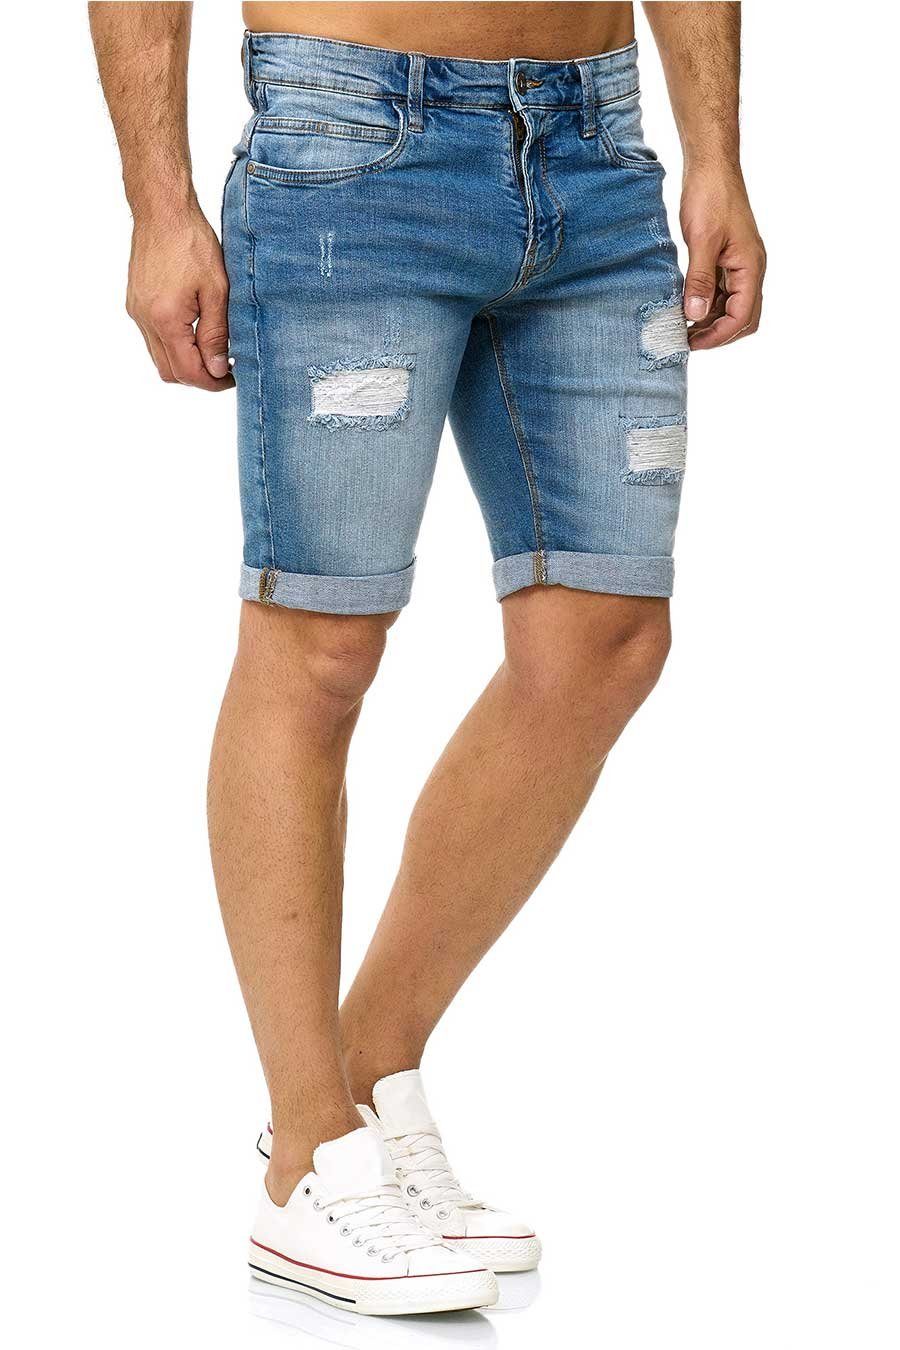 Indicode Blue & Wash mit Destroyed Shorts Used-Look KADEN HOLES Effekt